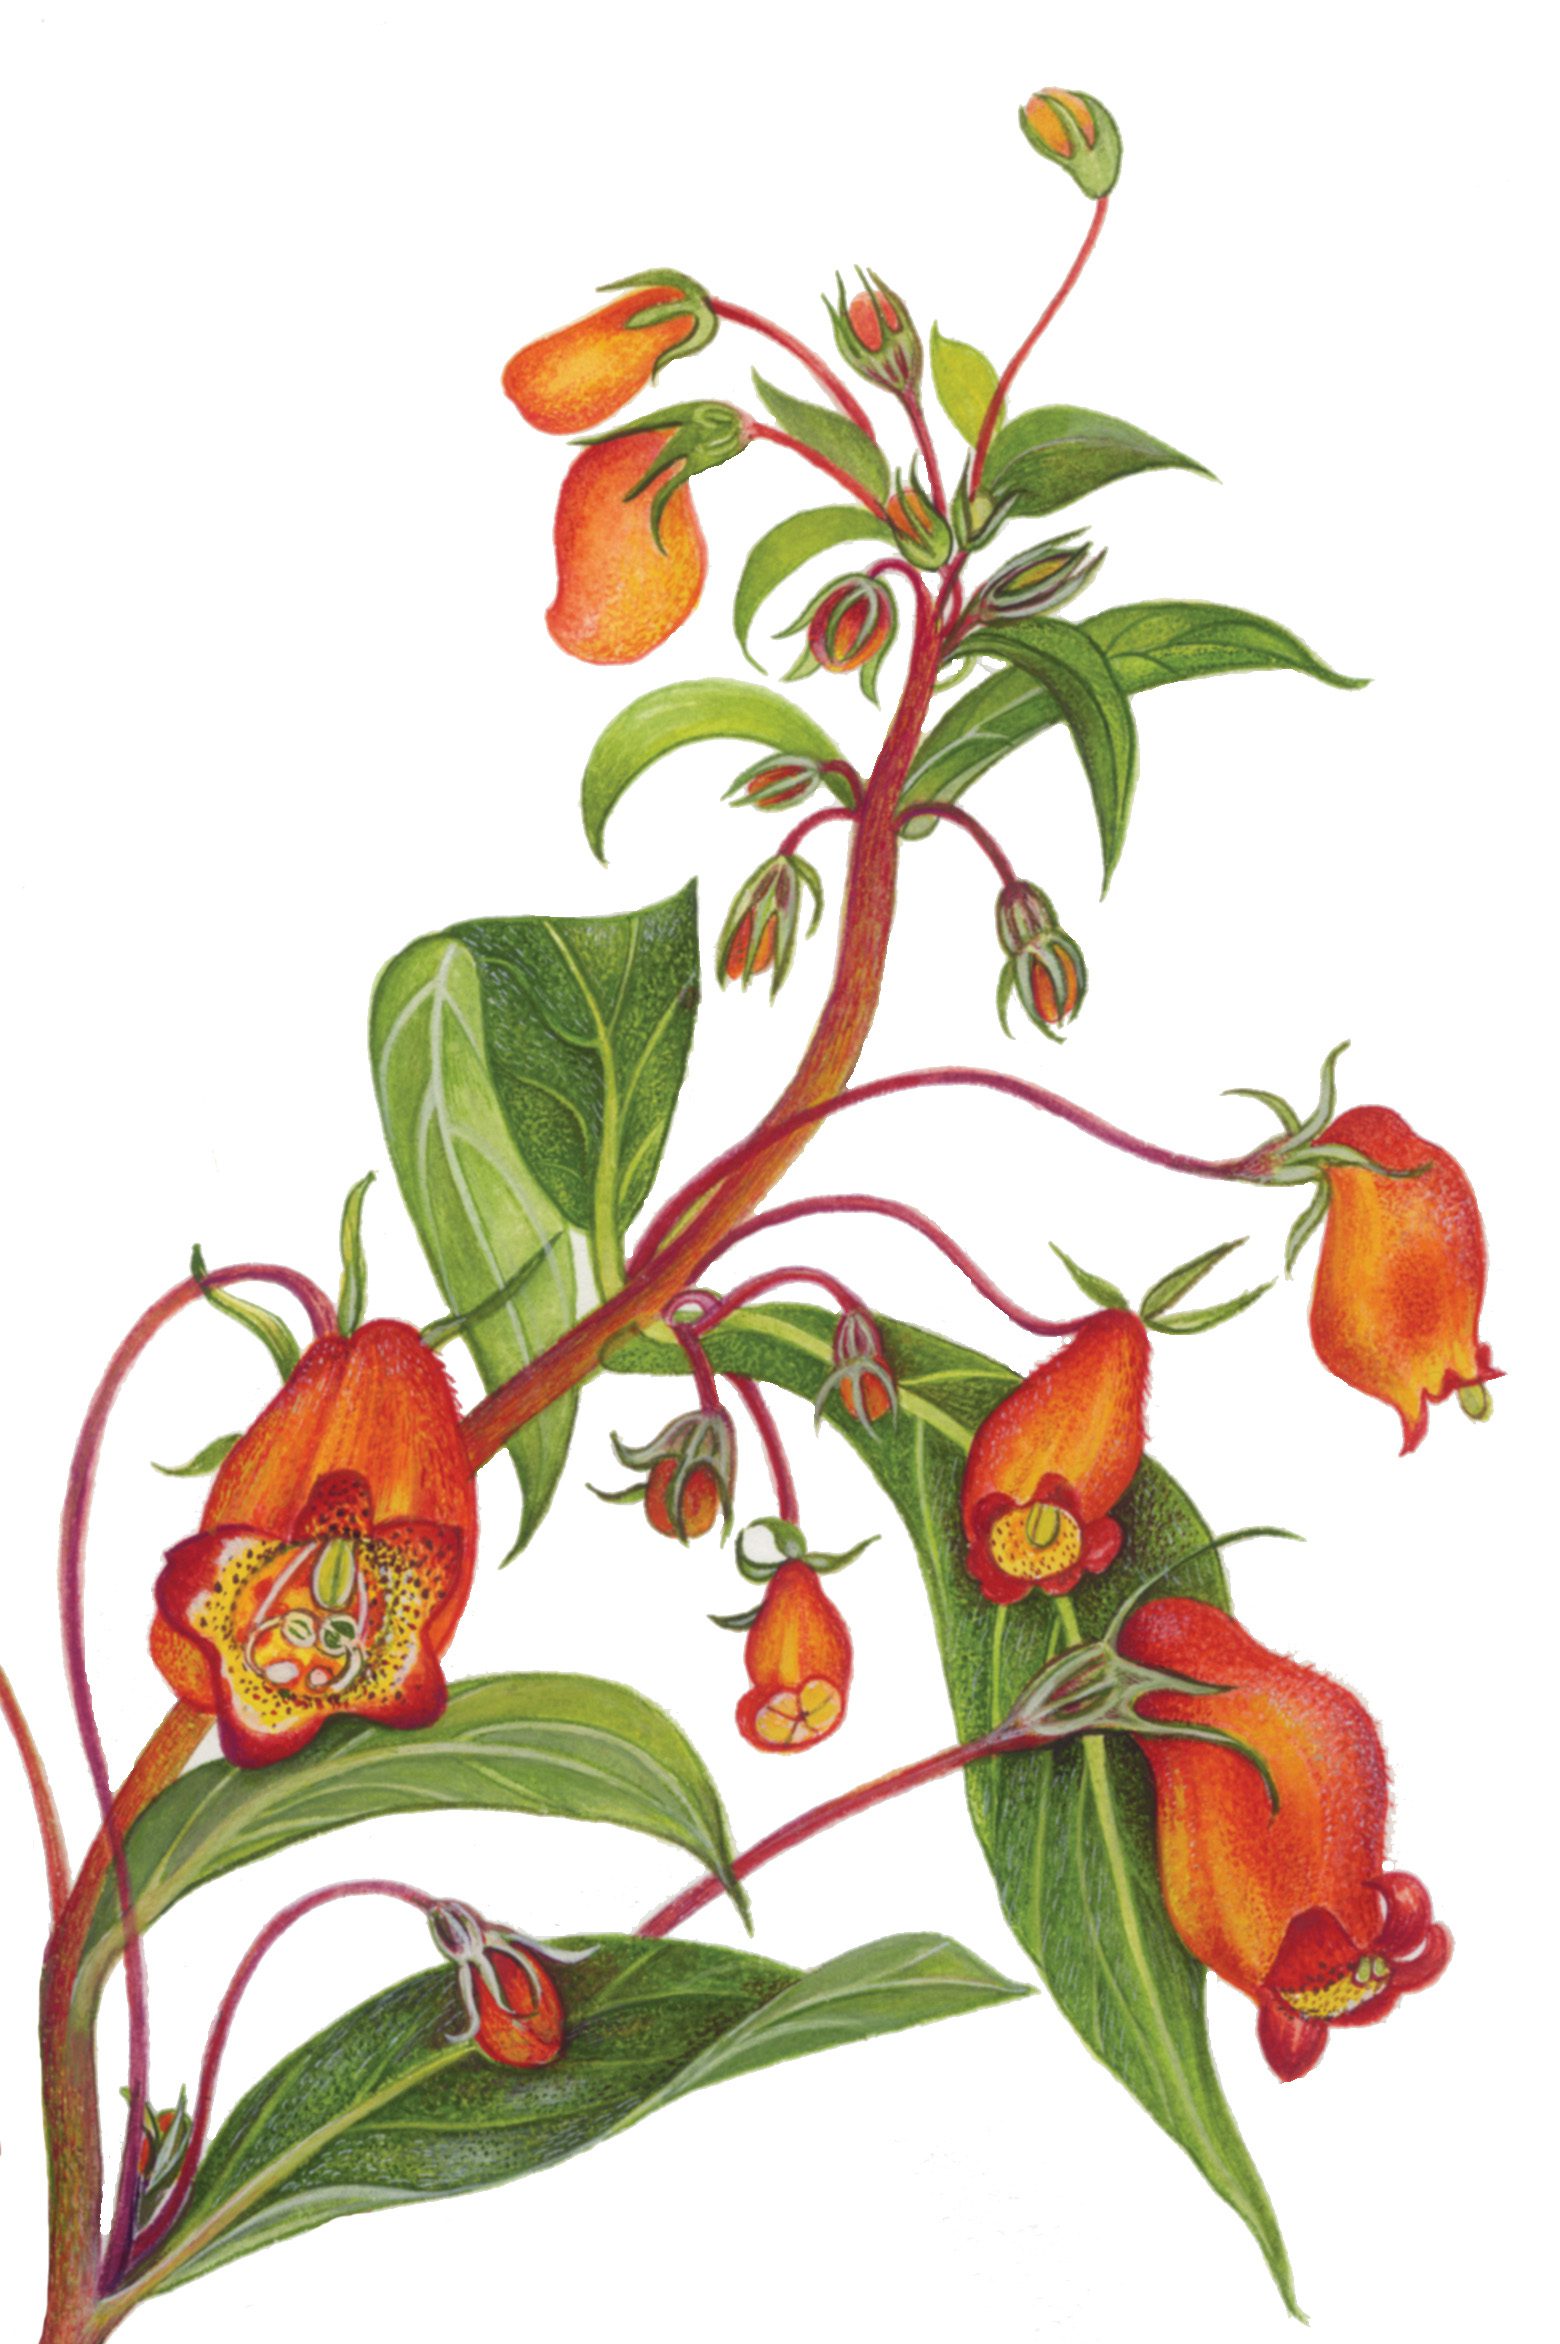 Gloxinia sylvatica 'Glasnevin Jubilee' by Heather Byers